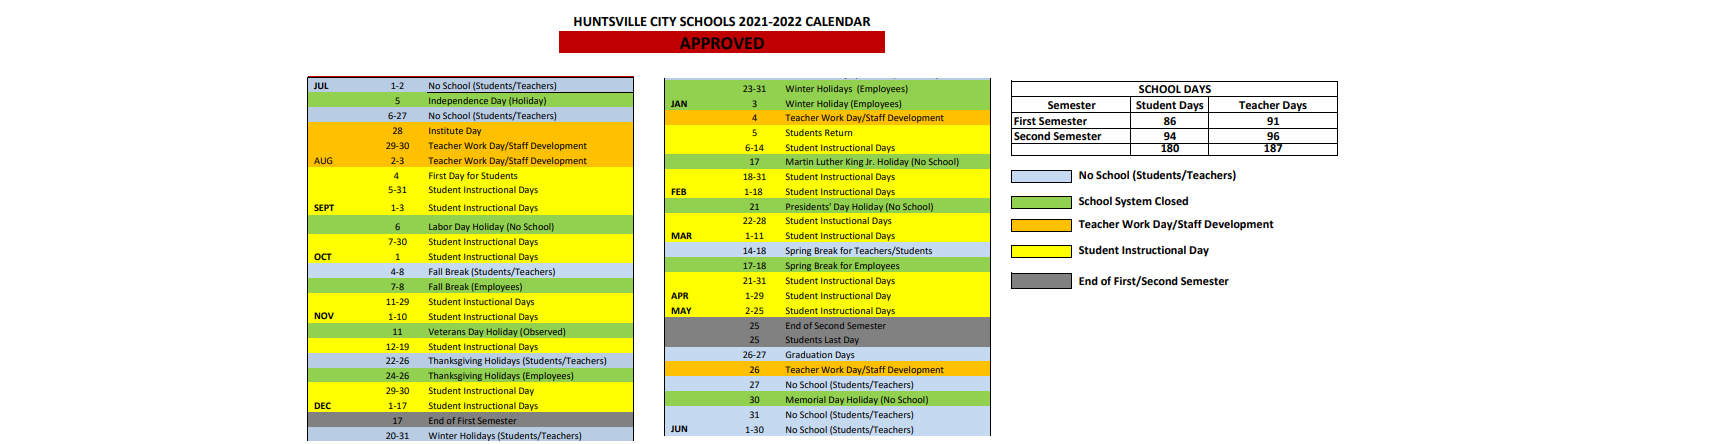 District School Academic Calendar Key for Mental Health Center